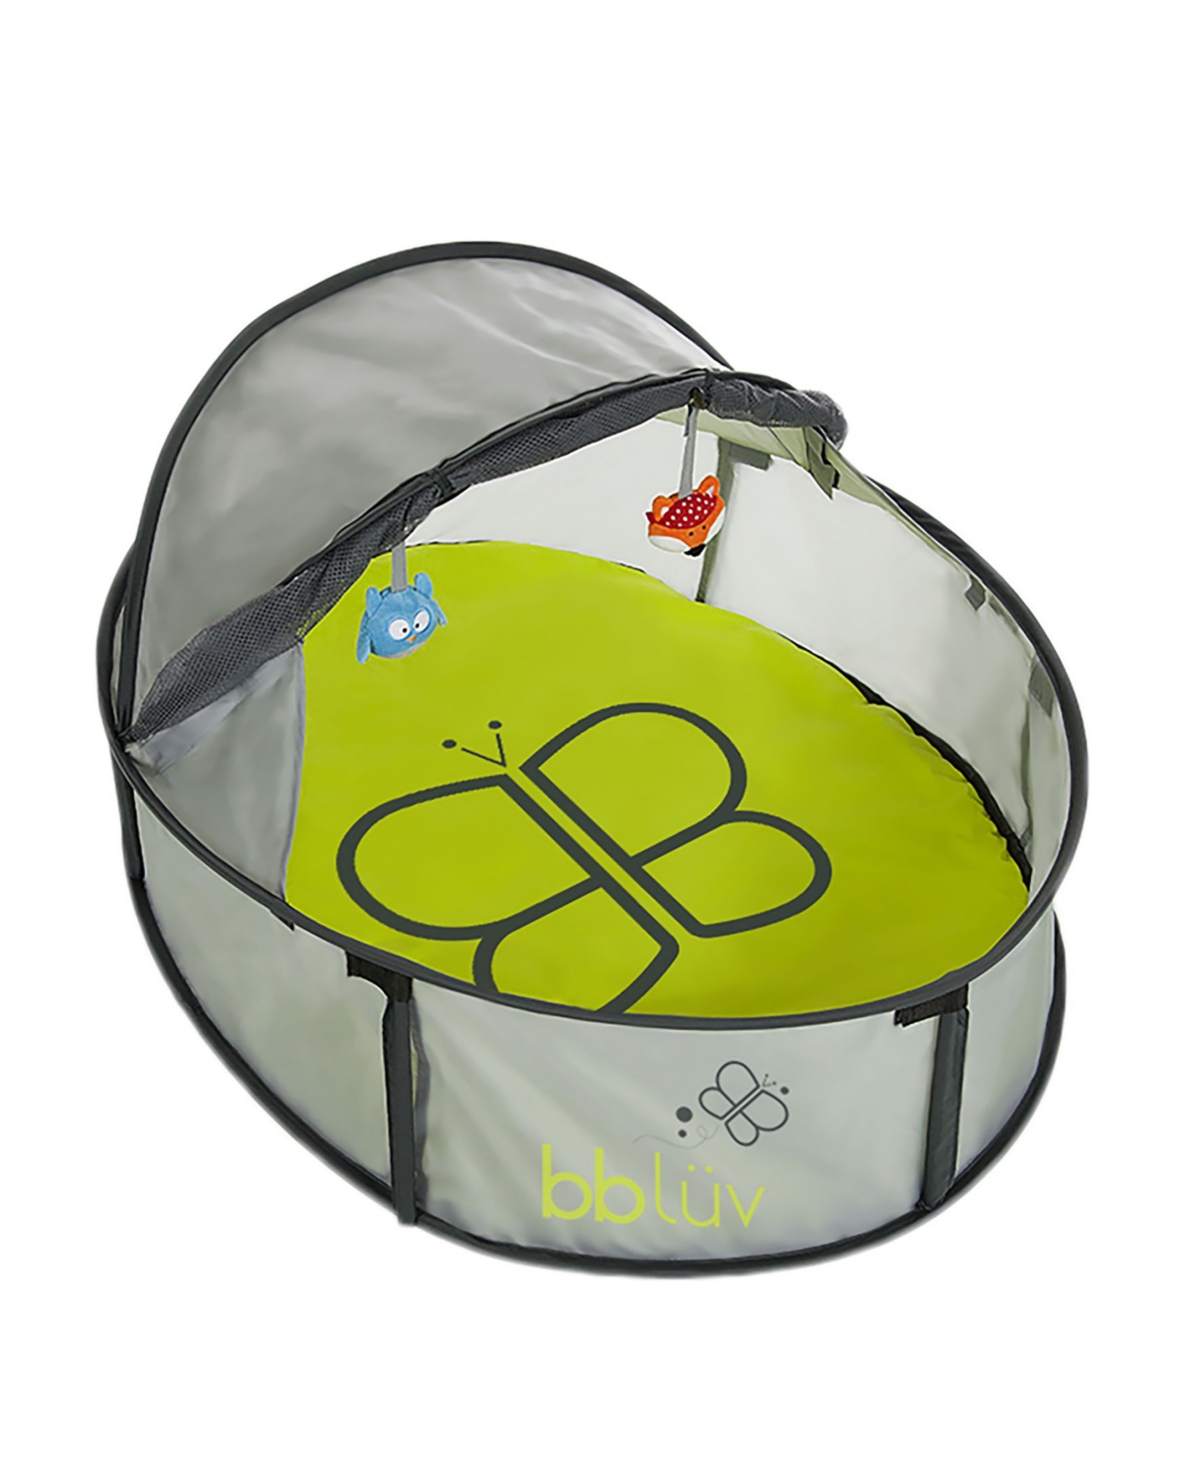 Bbluv Nido Mini 2 In 1 Travel Play Tent In Gray